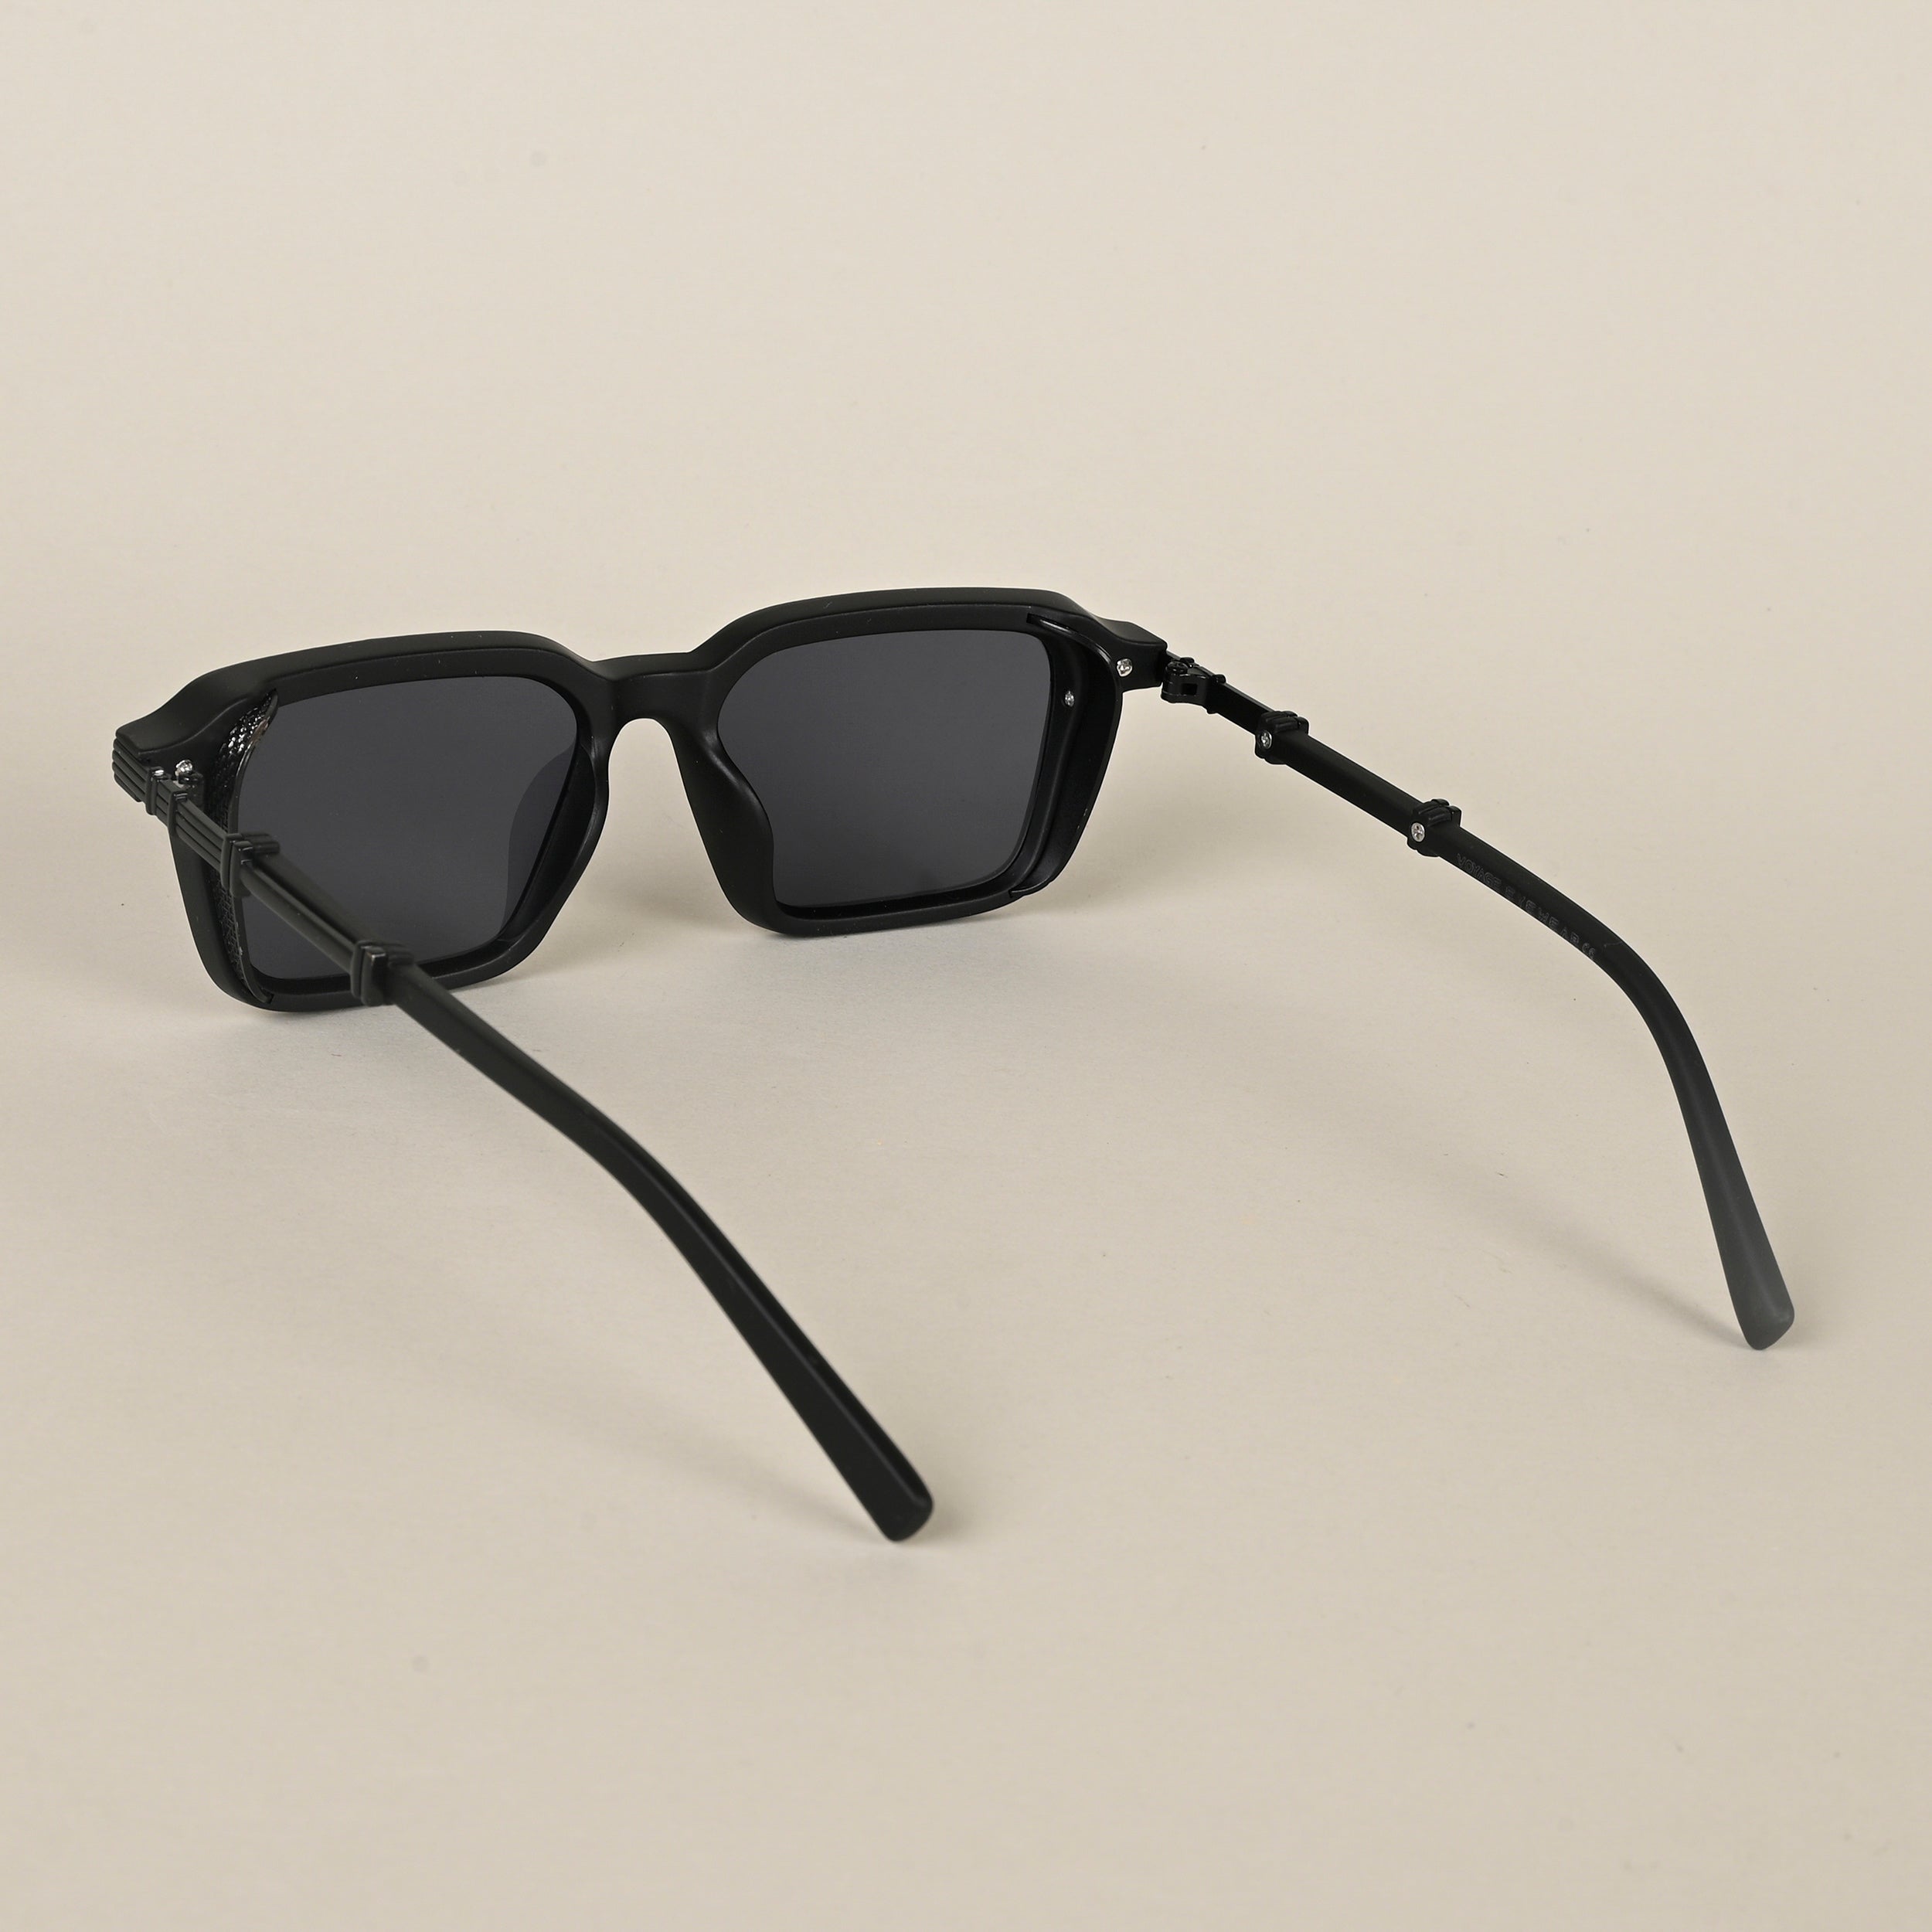 Voyage Black Wayfarer Sunglasses for Men & Women (98086MG4566)